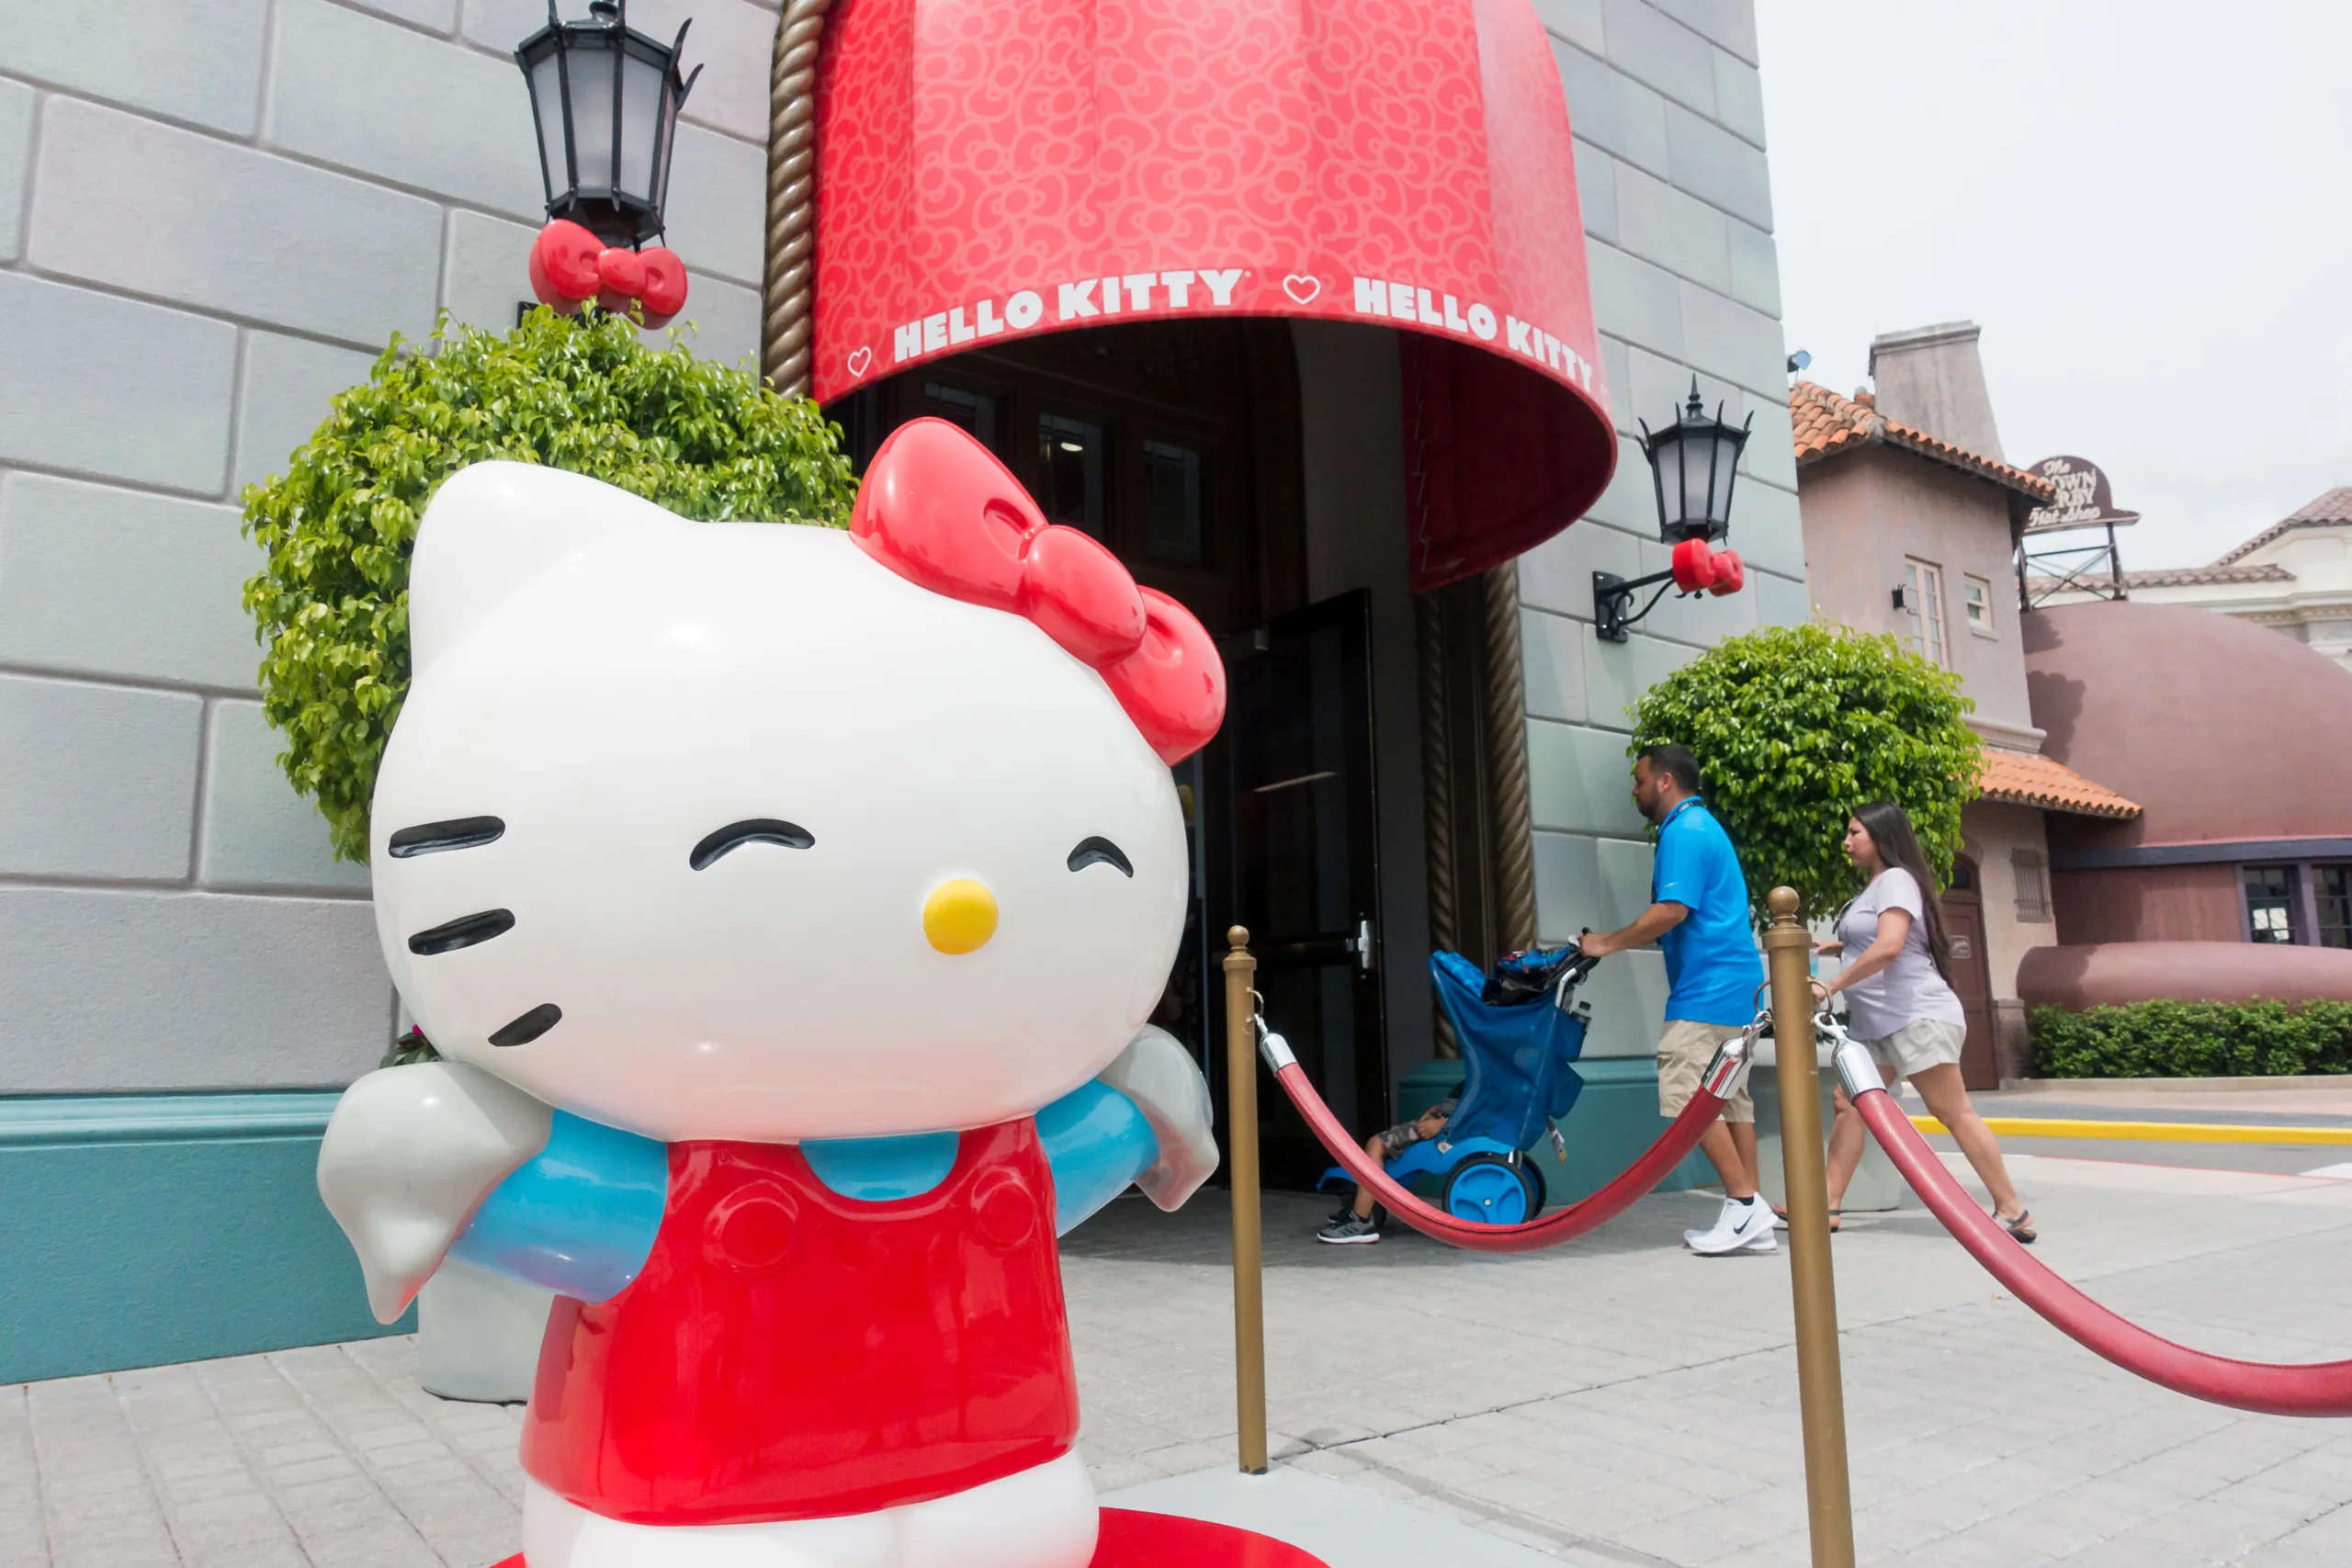 Hello Kitty figurine outside Hello Kitty shop in USA